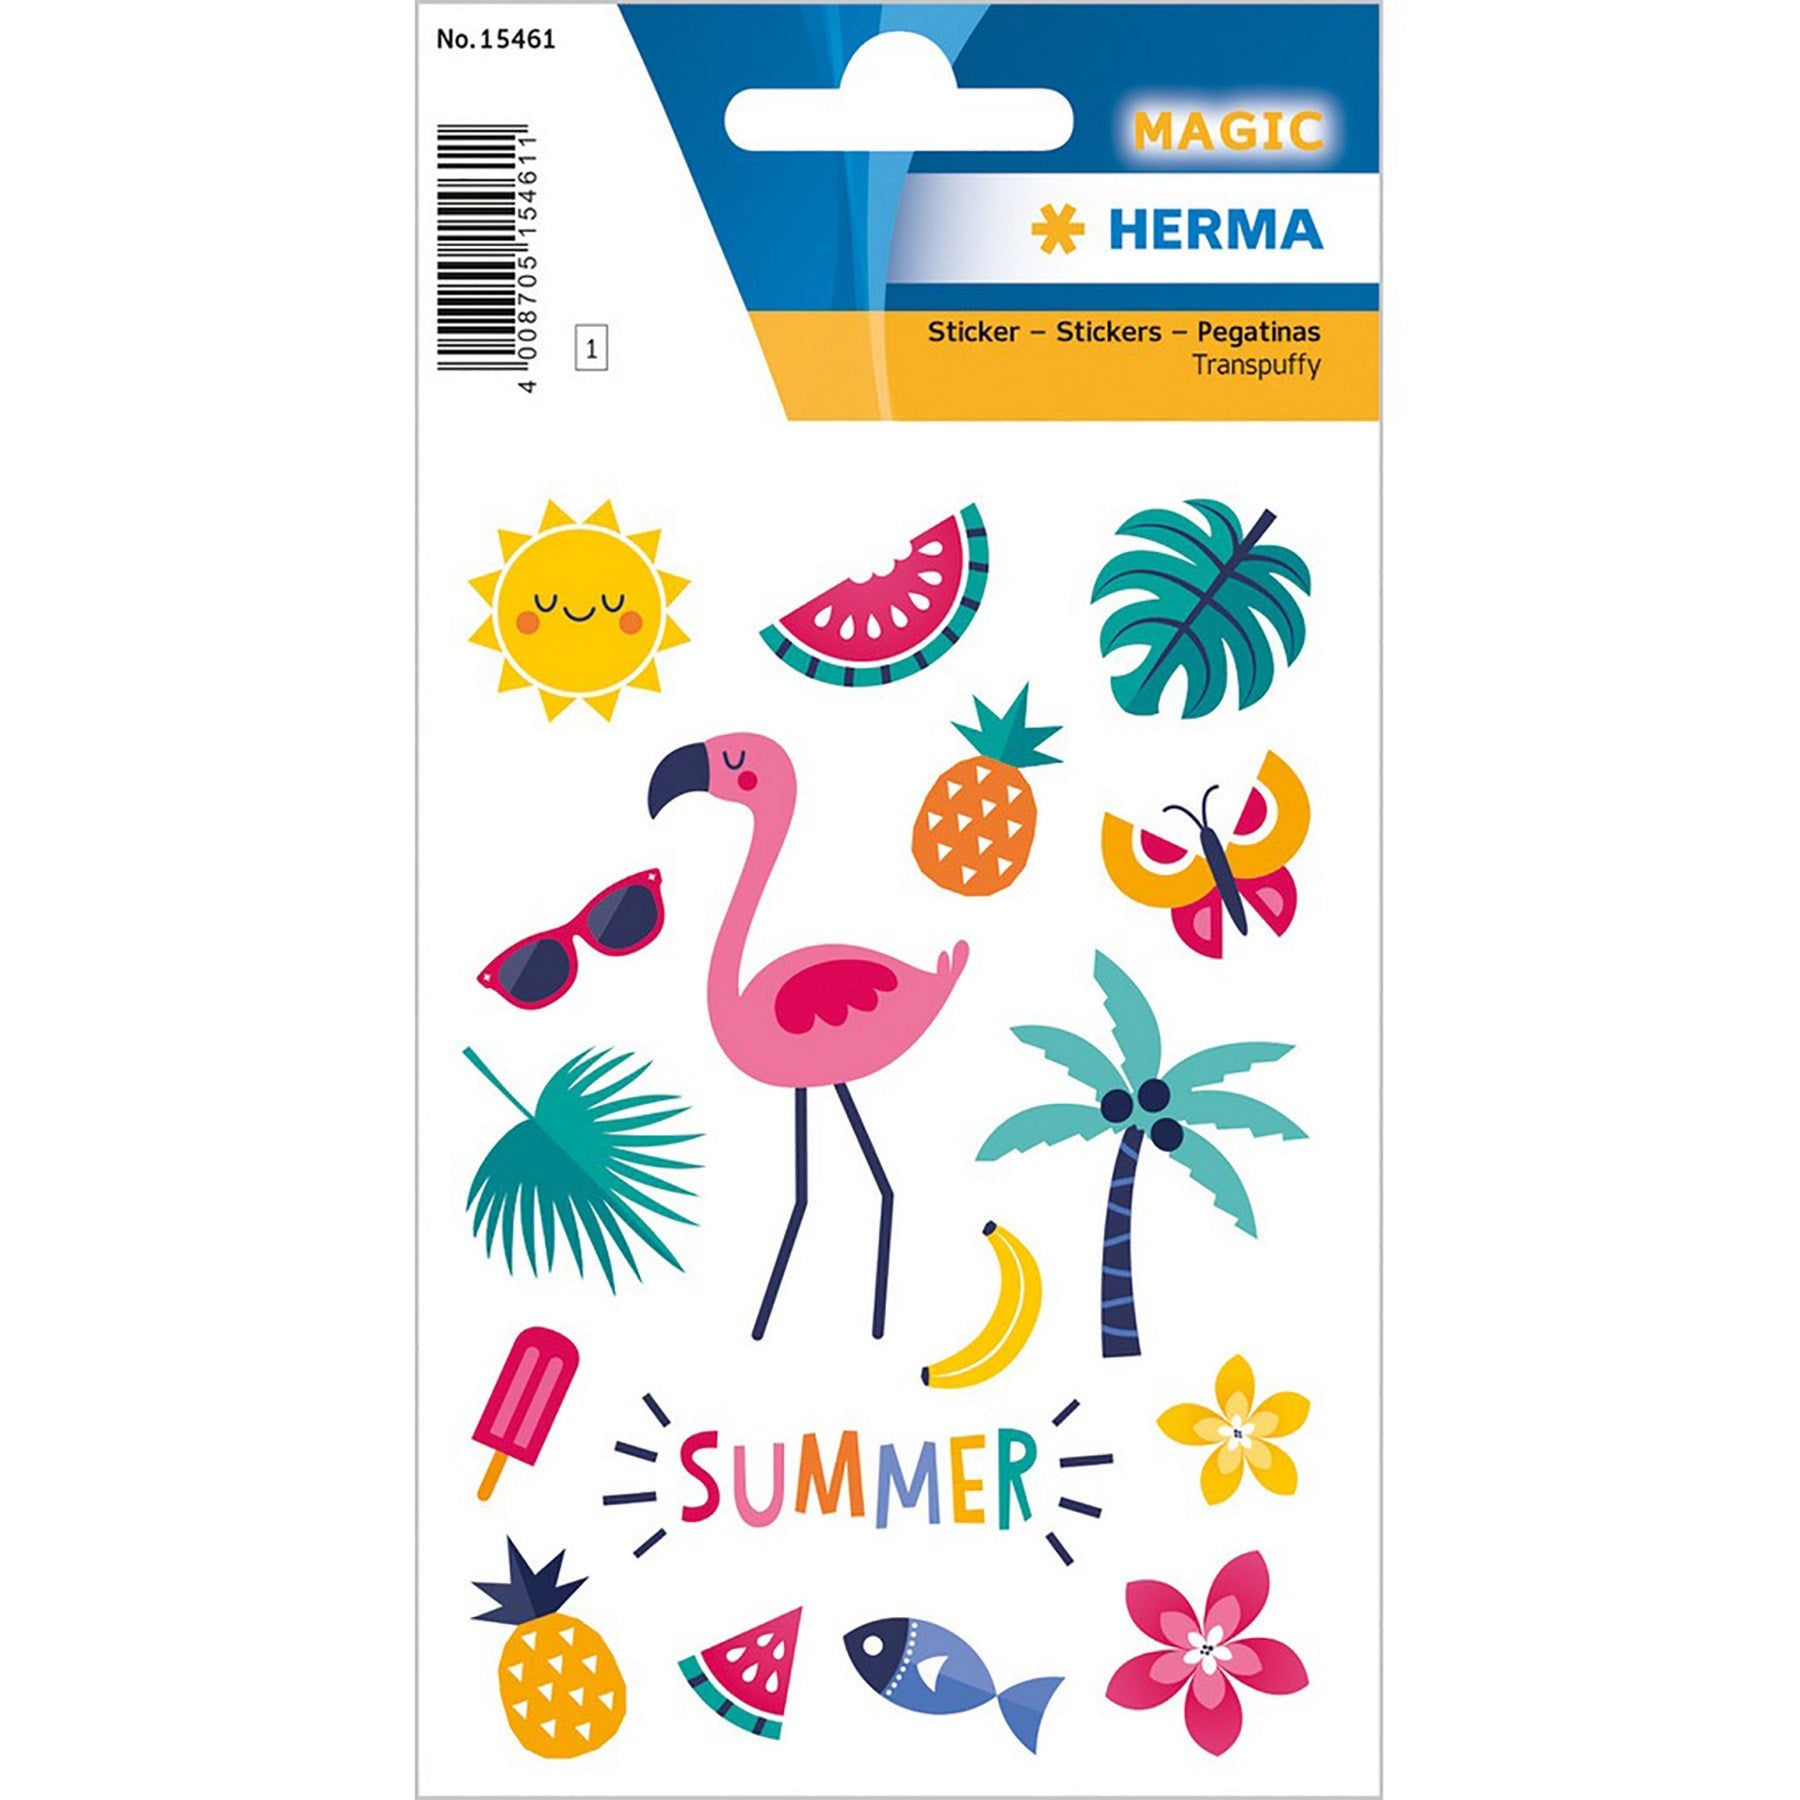 Herma Magic Stickers Summer Feeling Transpuffy 4.75x3.1in Sheet